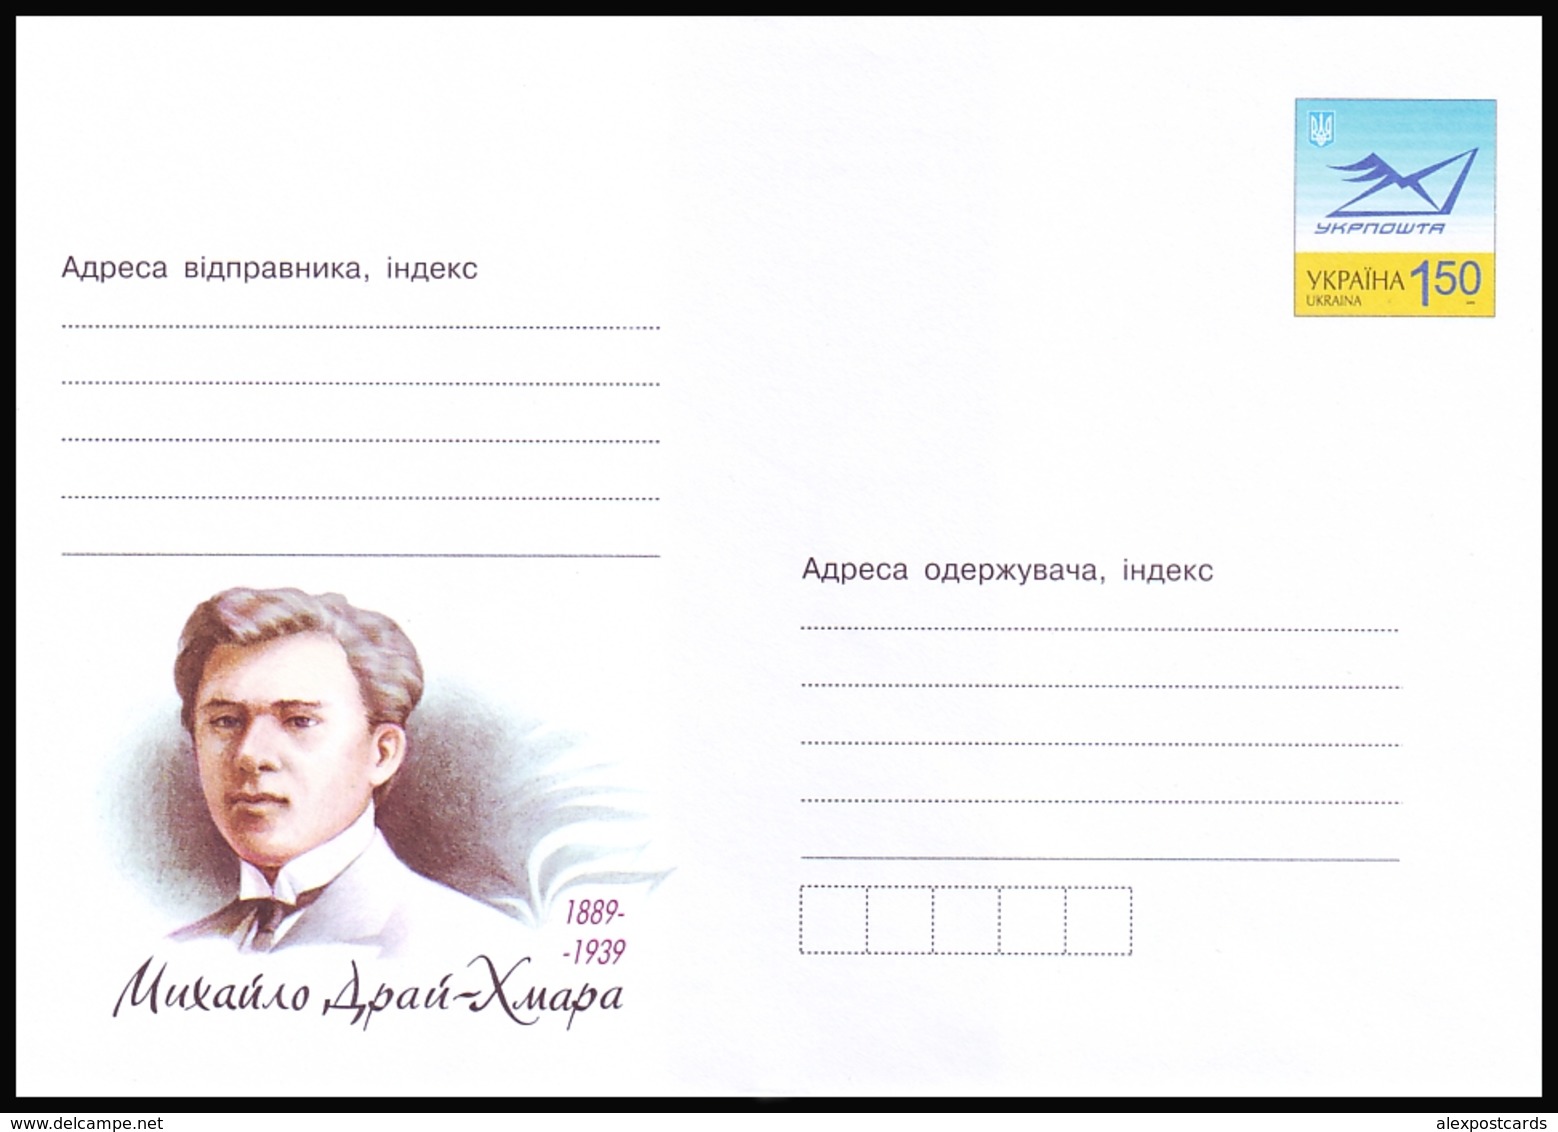 UKRAINE 2009. (9-3363). MYKHAYLO DRAY-KHMARA, POET AND TRASLATOR. Postal Stationery Stamped Cover (**) - Ukraine